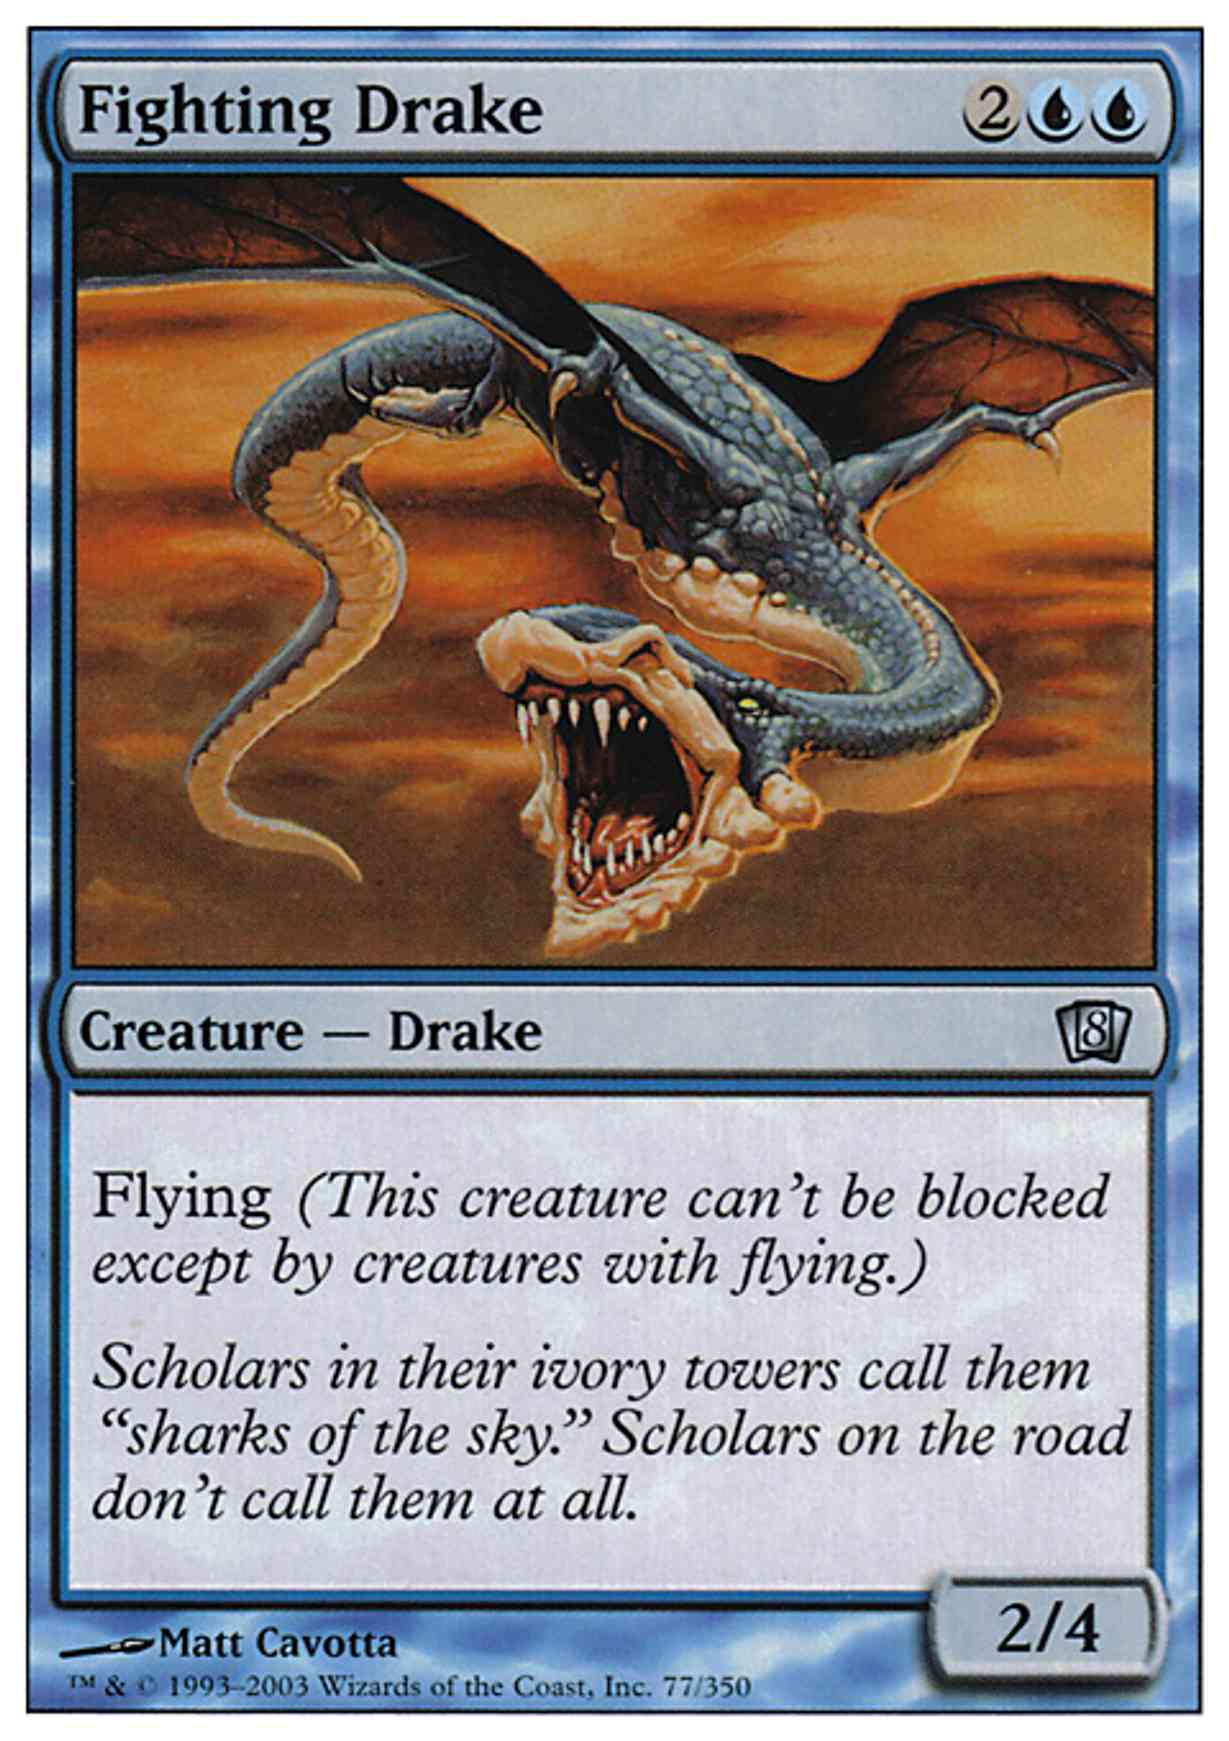 Fighting Drake magic card front